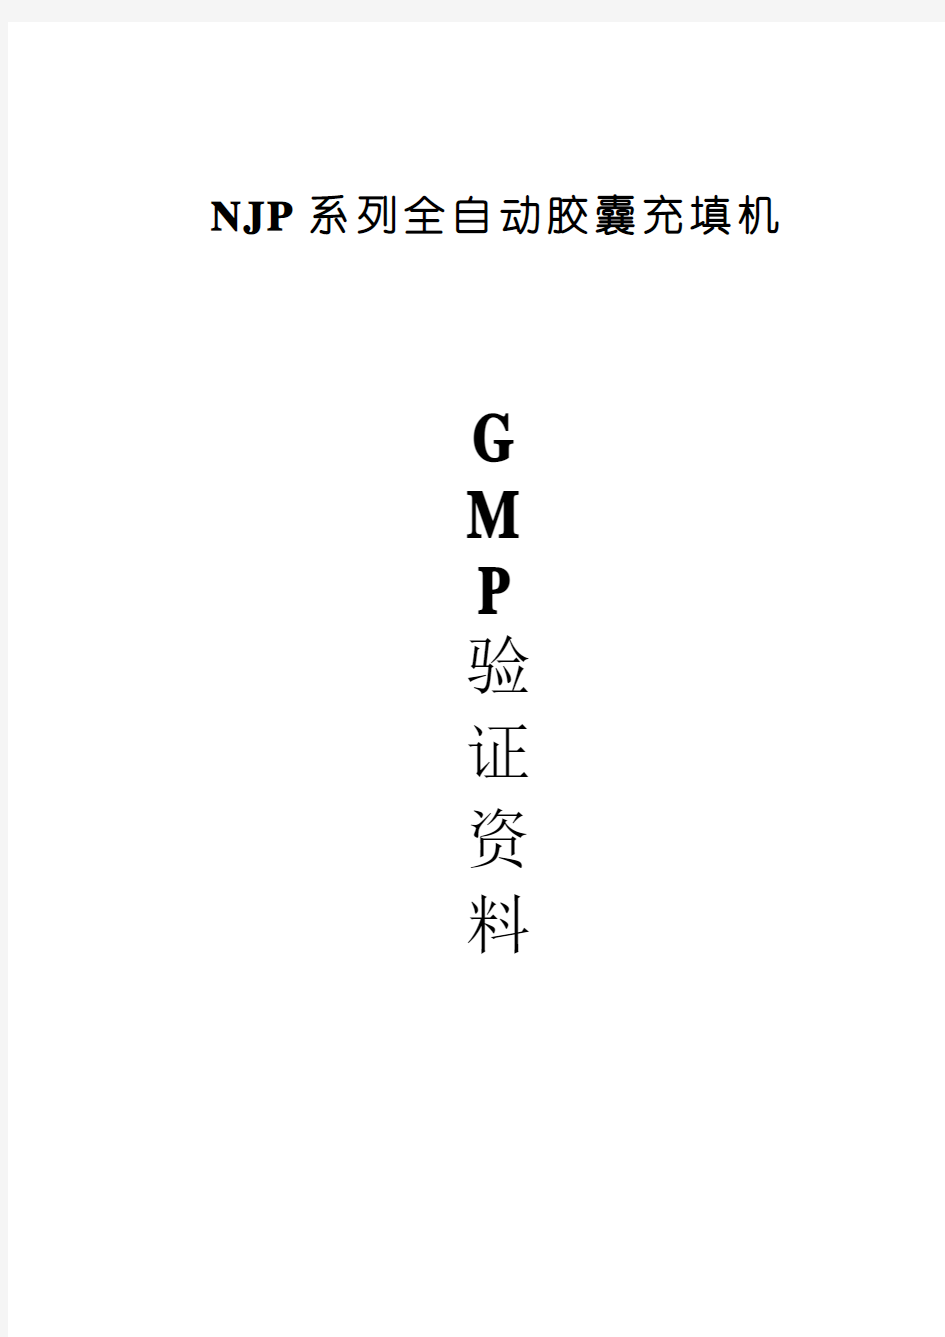 NJP全自动胶囊充填机验证方案